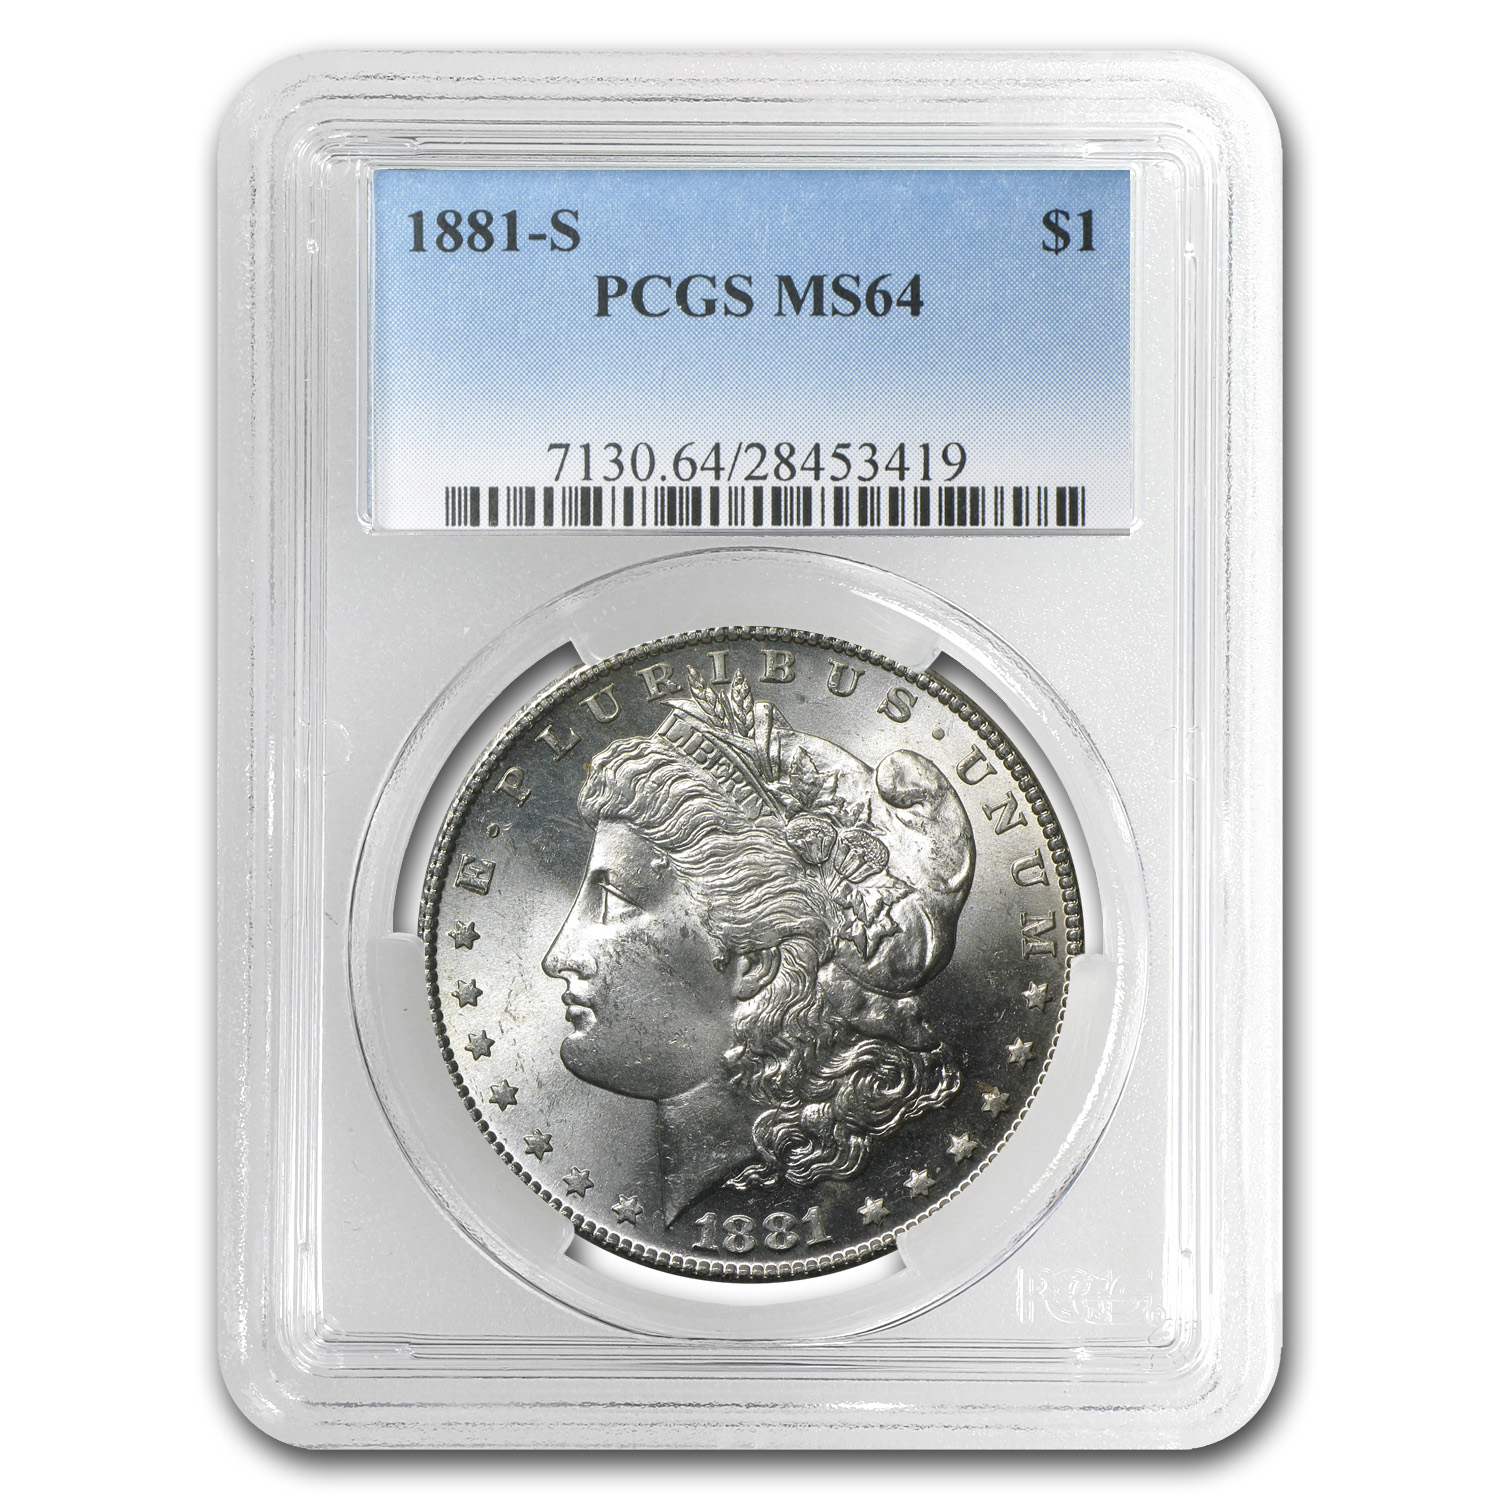 PCGS MS64 1881-S US Morgan Silver Dollar $1 